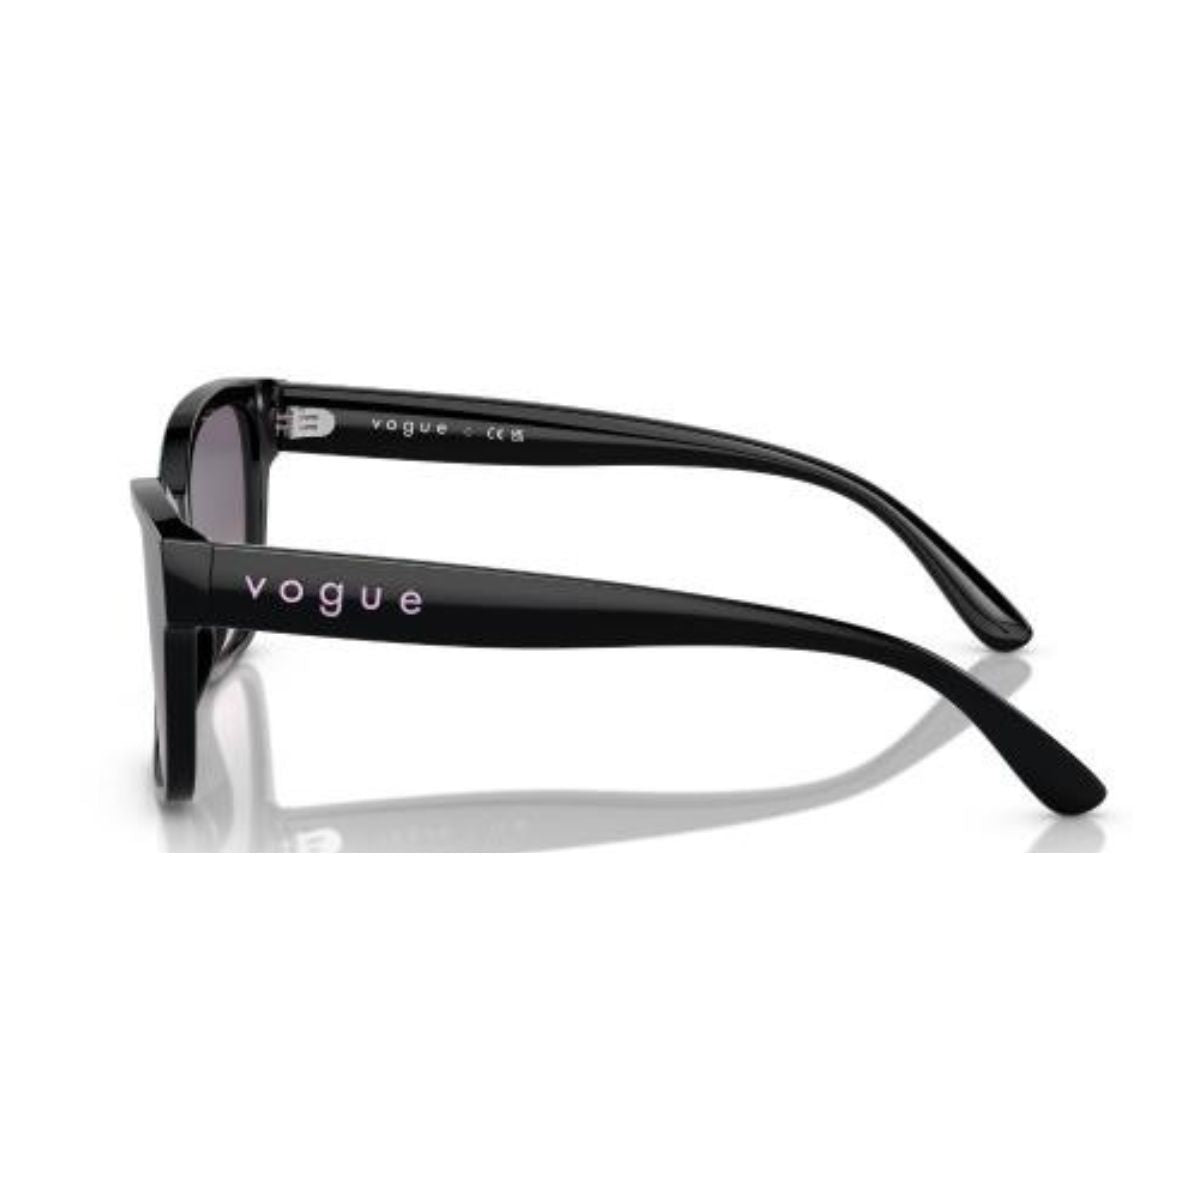 "Shop Vogue Black Cat Eye Sunglasses For Womens at Optorium"